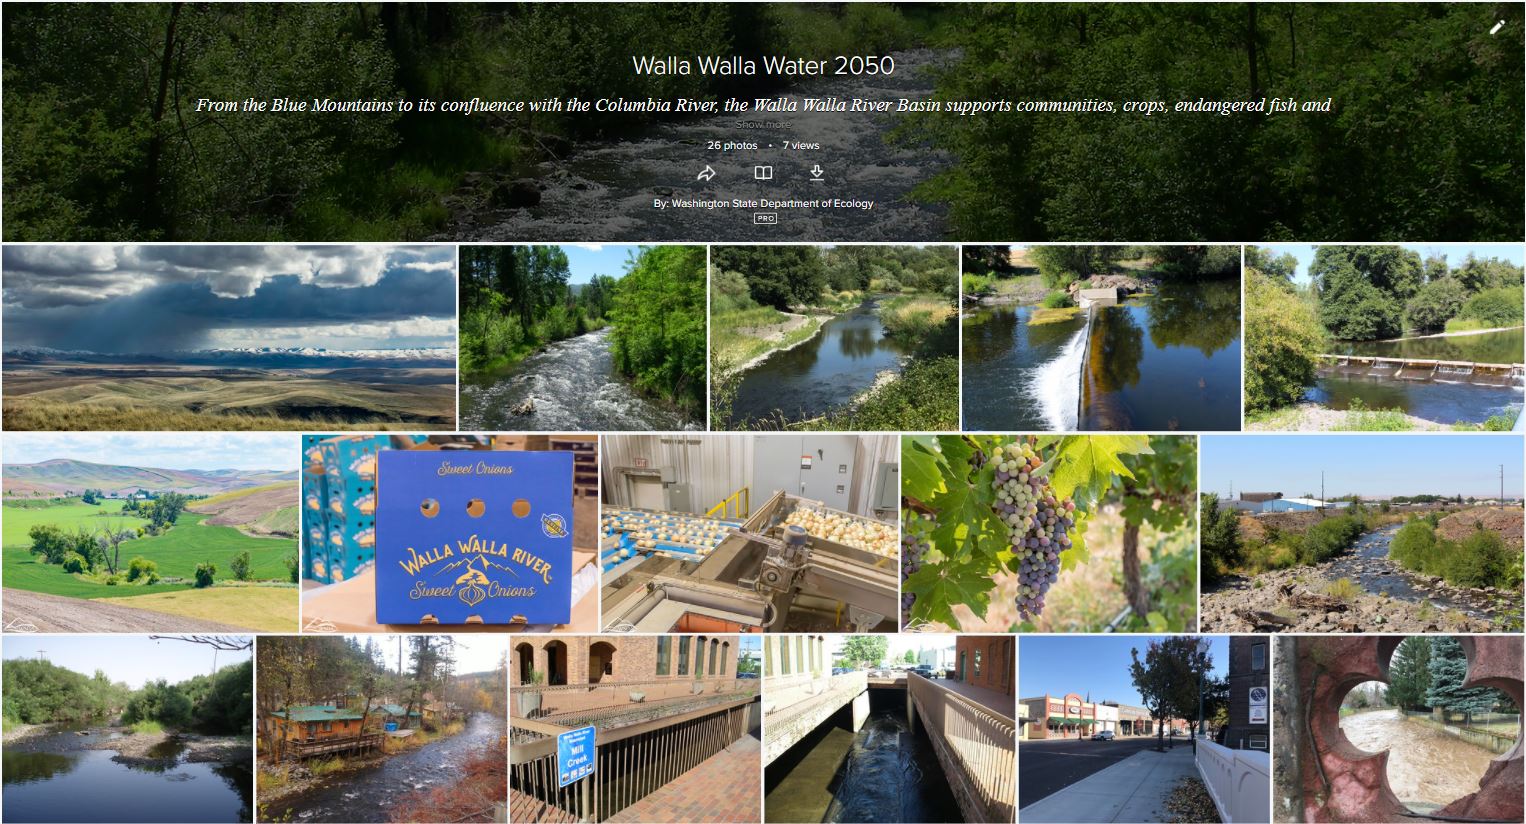 A grouping of 16 photos feature various scenes representing the Walla Walla River Basin